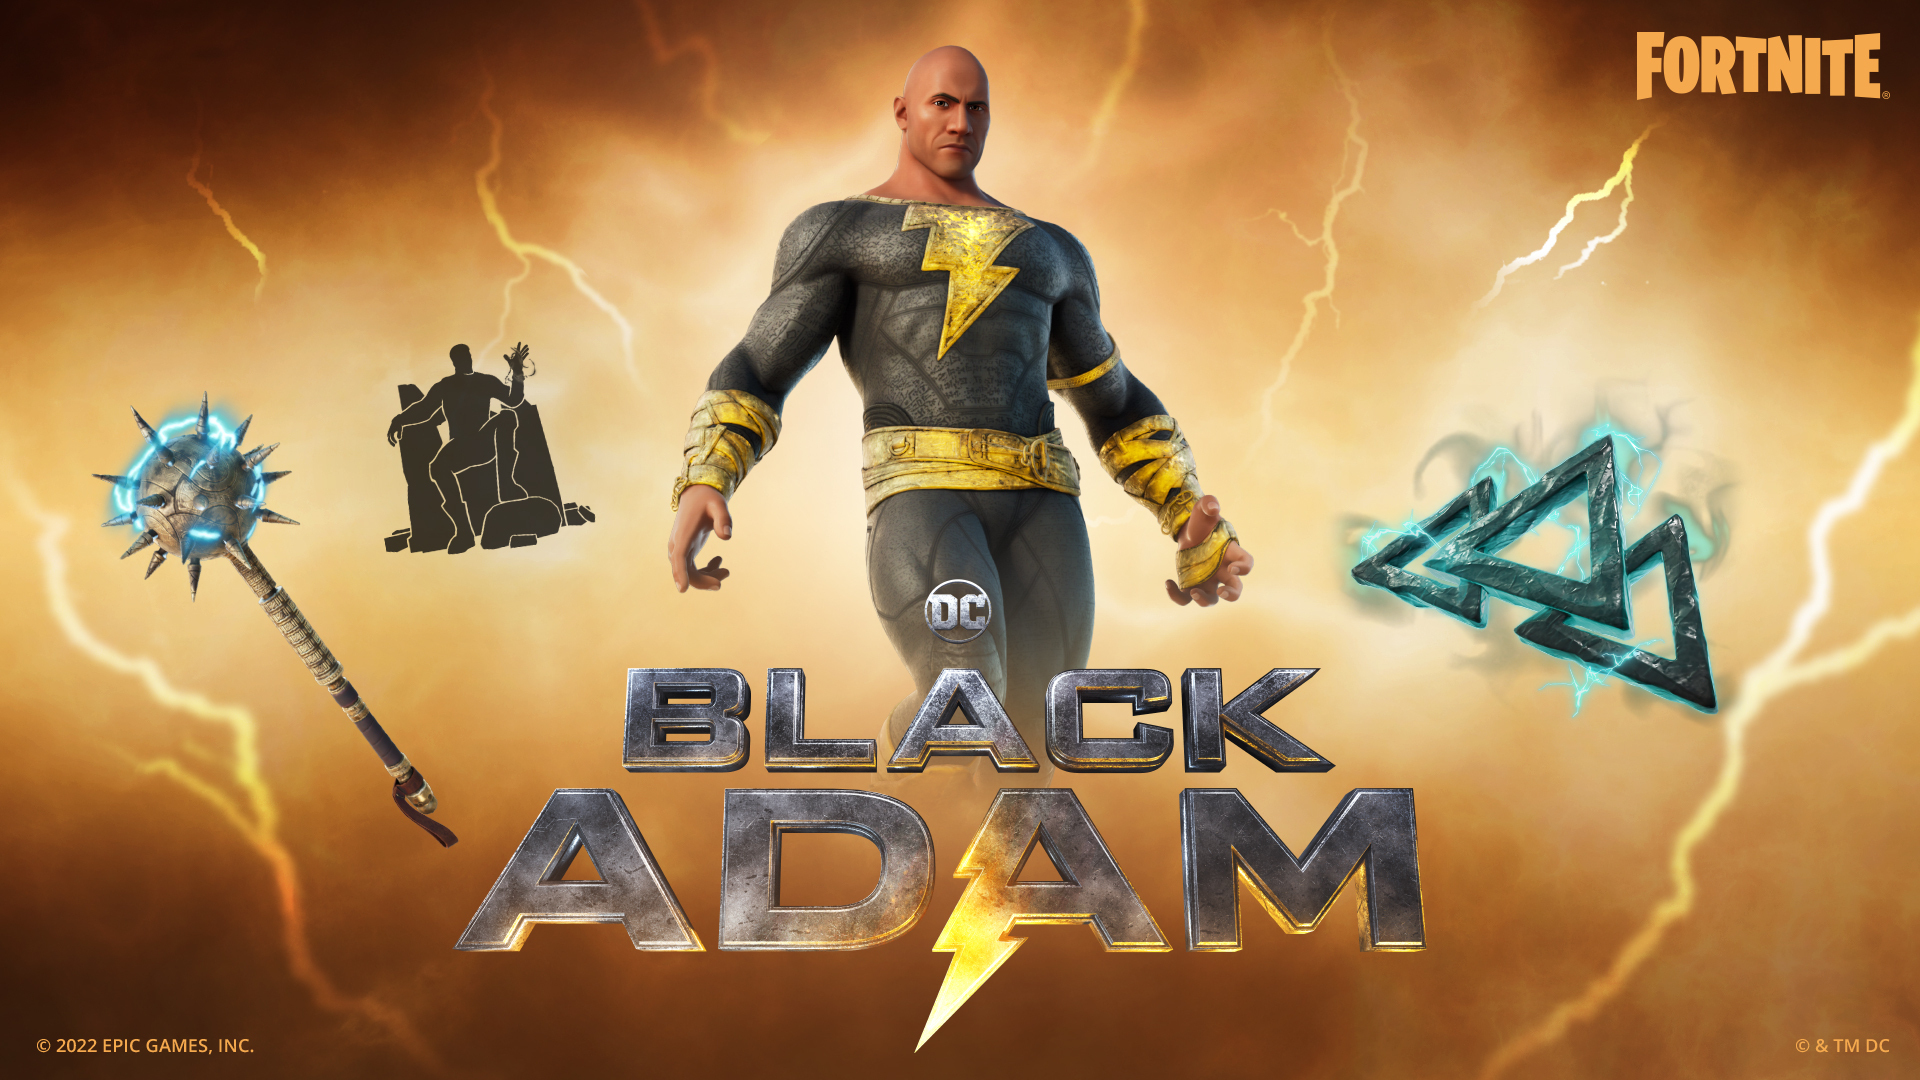 The Rock as Black Adam in Fortnite.